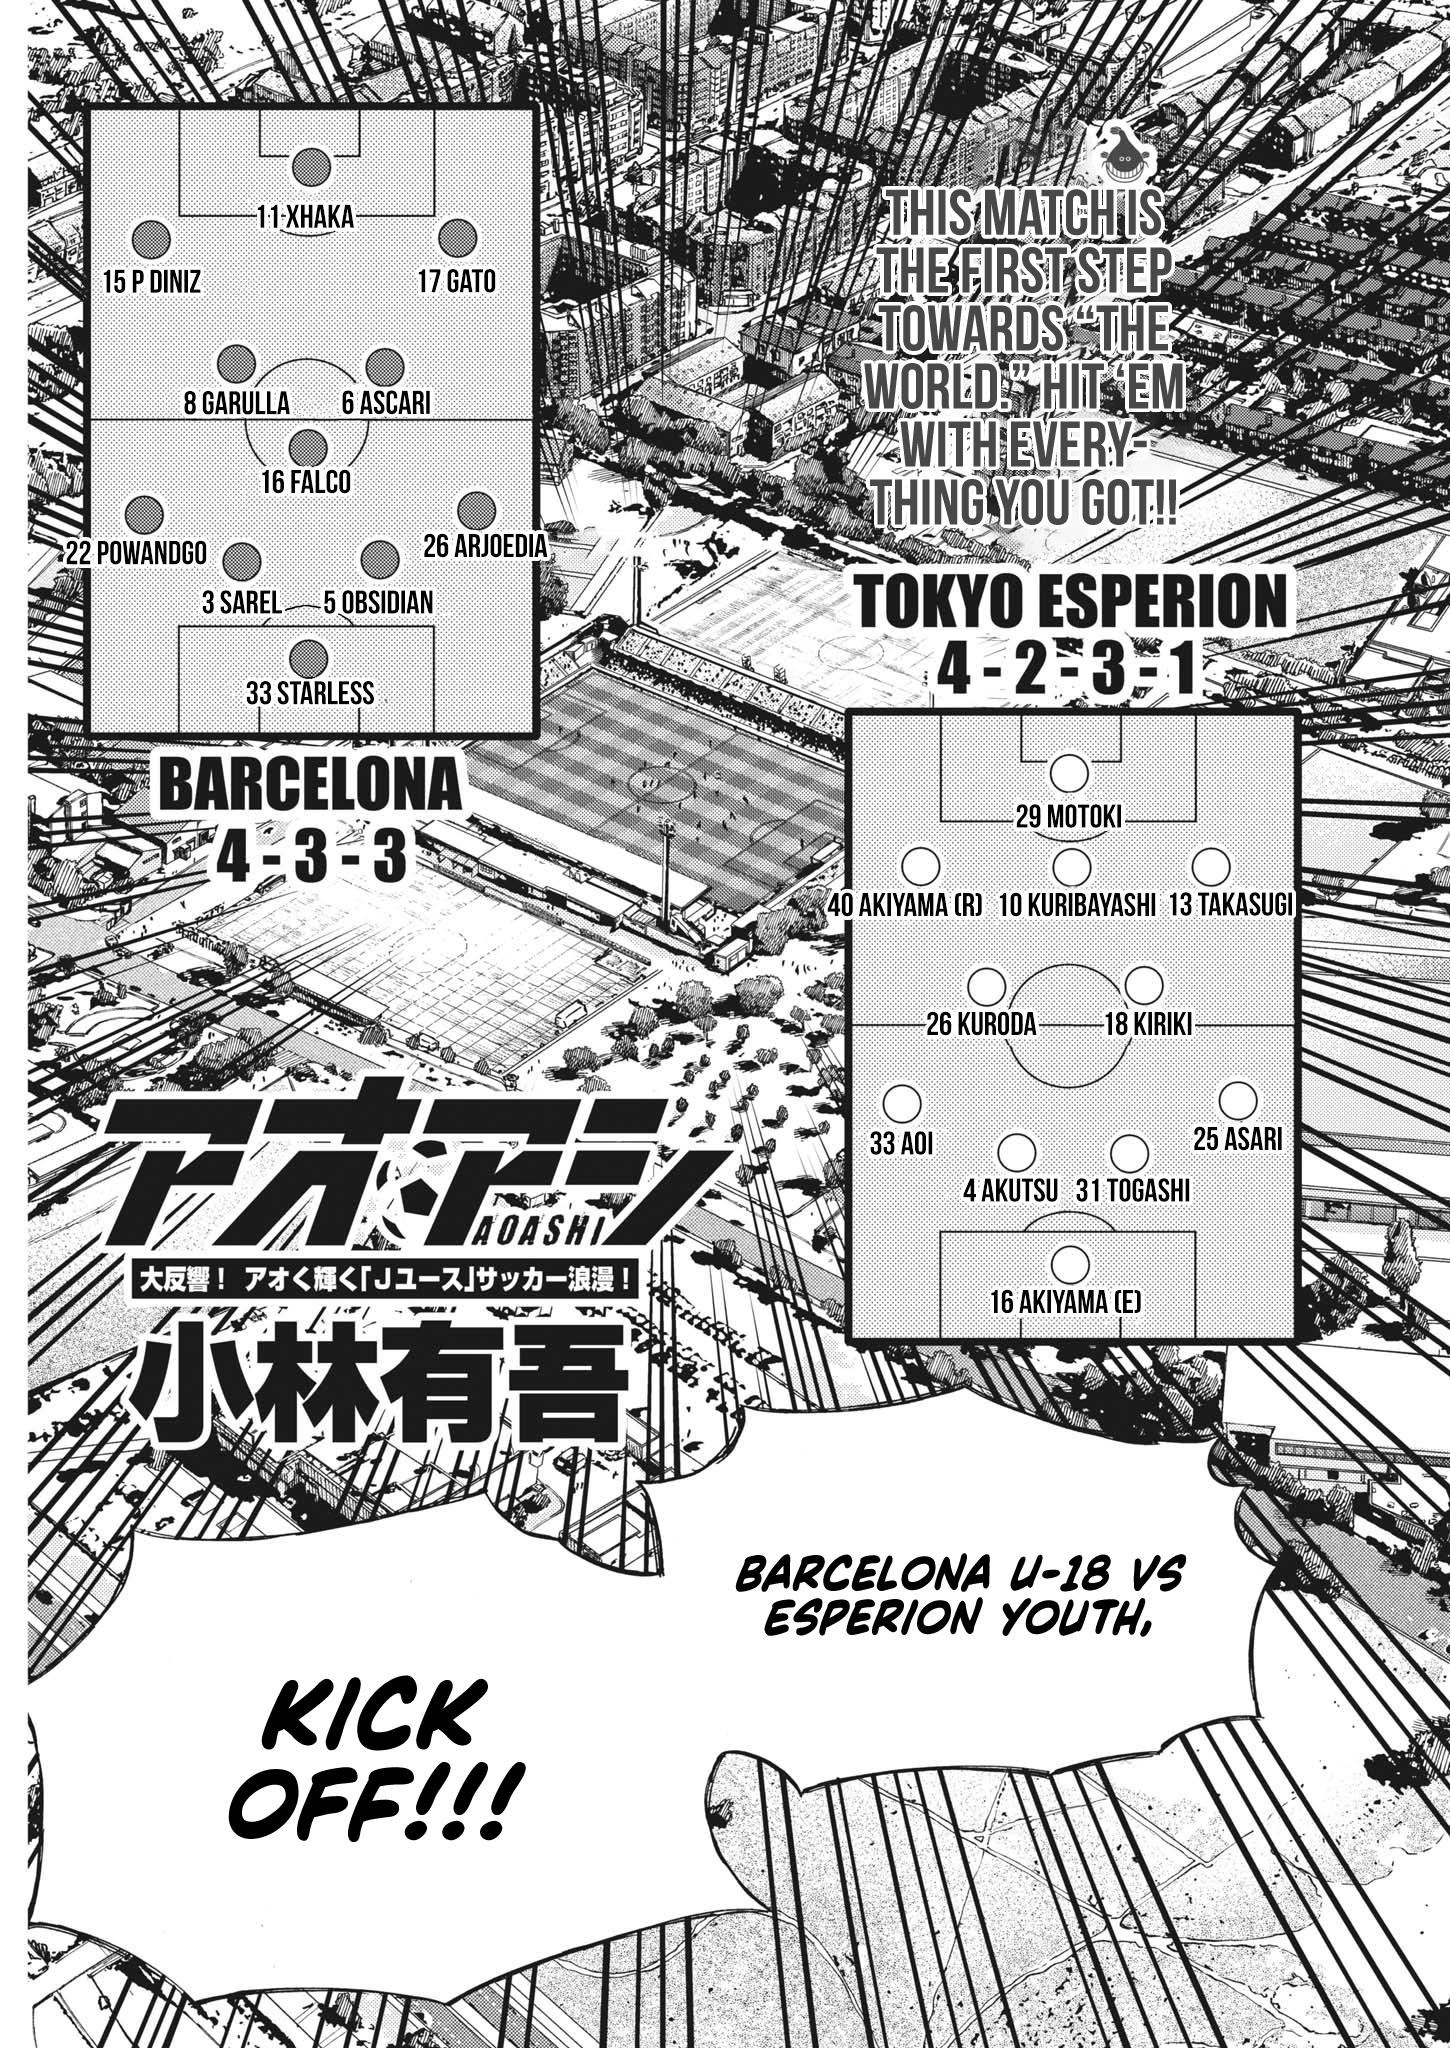 Ao Ashi Chapter 349: Alkass Cup Group D, Match Vs Barcelon U-18 - Picture 2